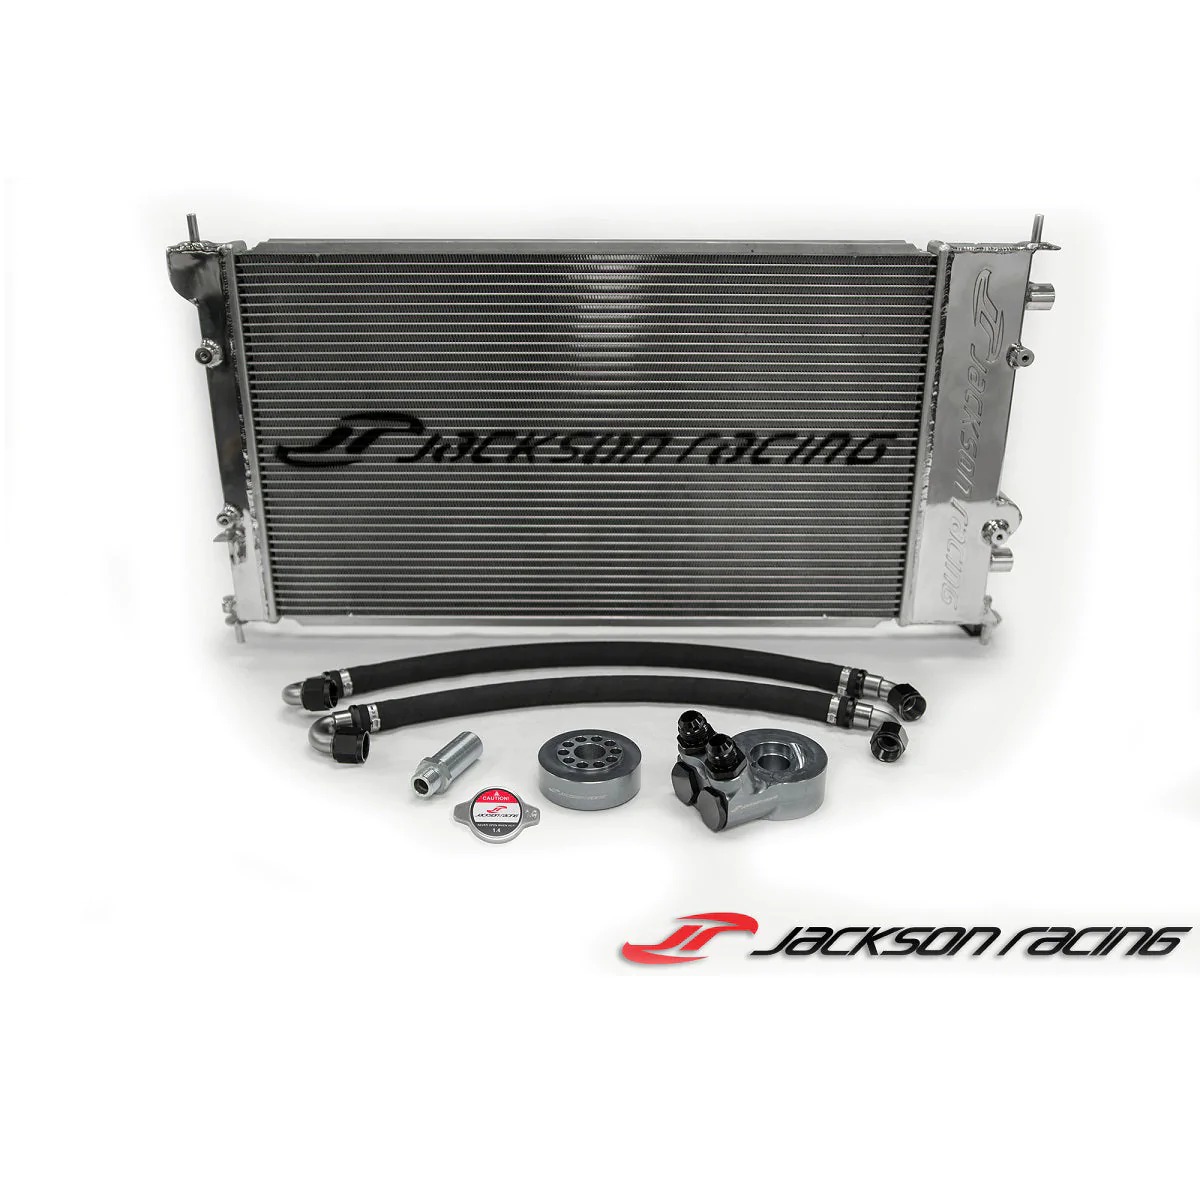 Jackson Racing Dual Radiator/Oil Cooler Kit